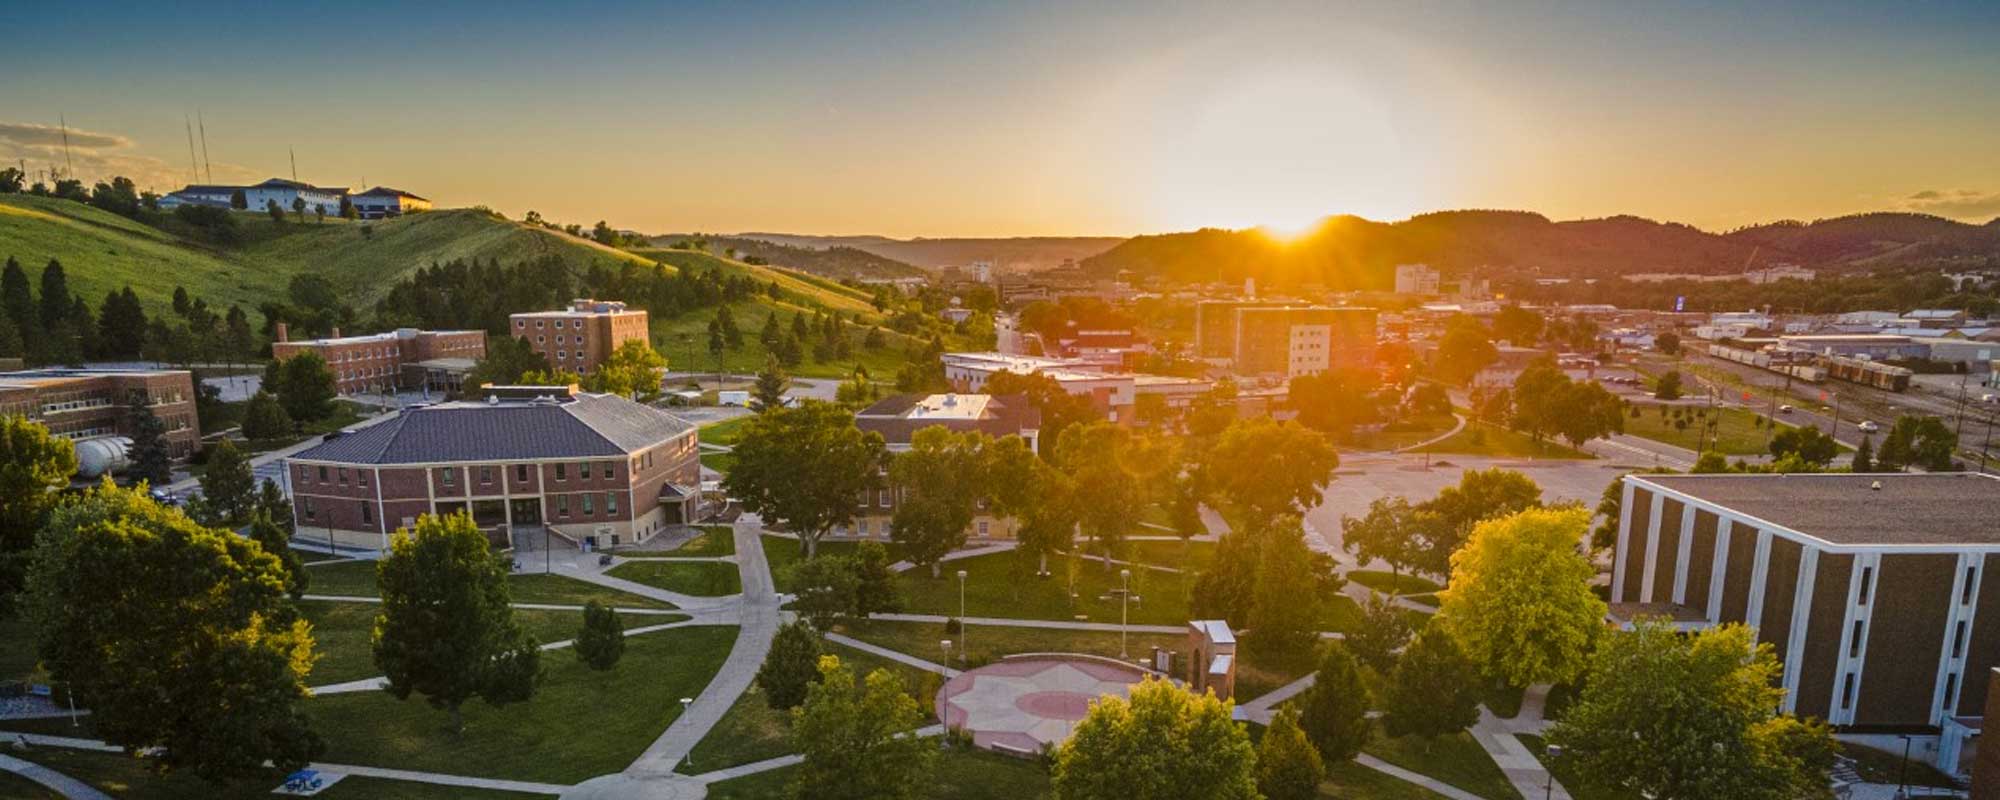 South Dakota Mines Campus Sunset